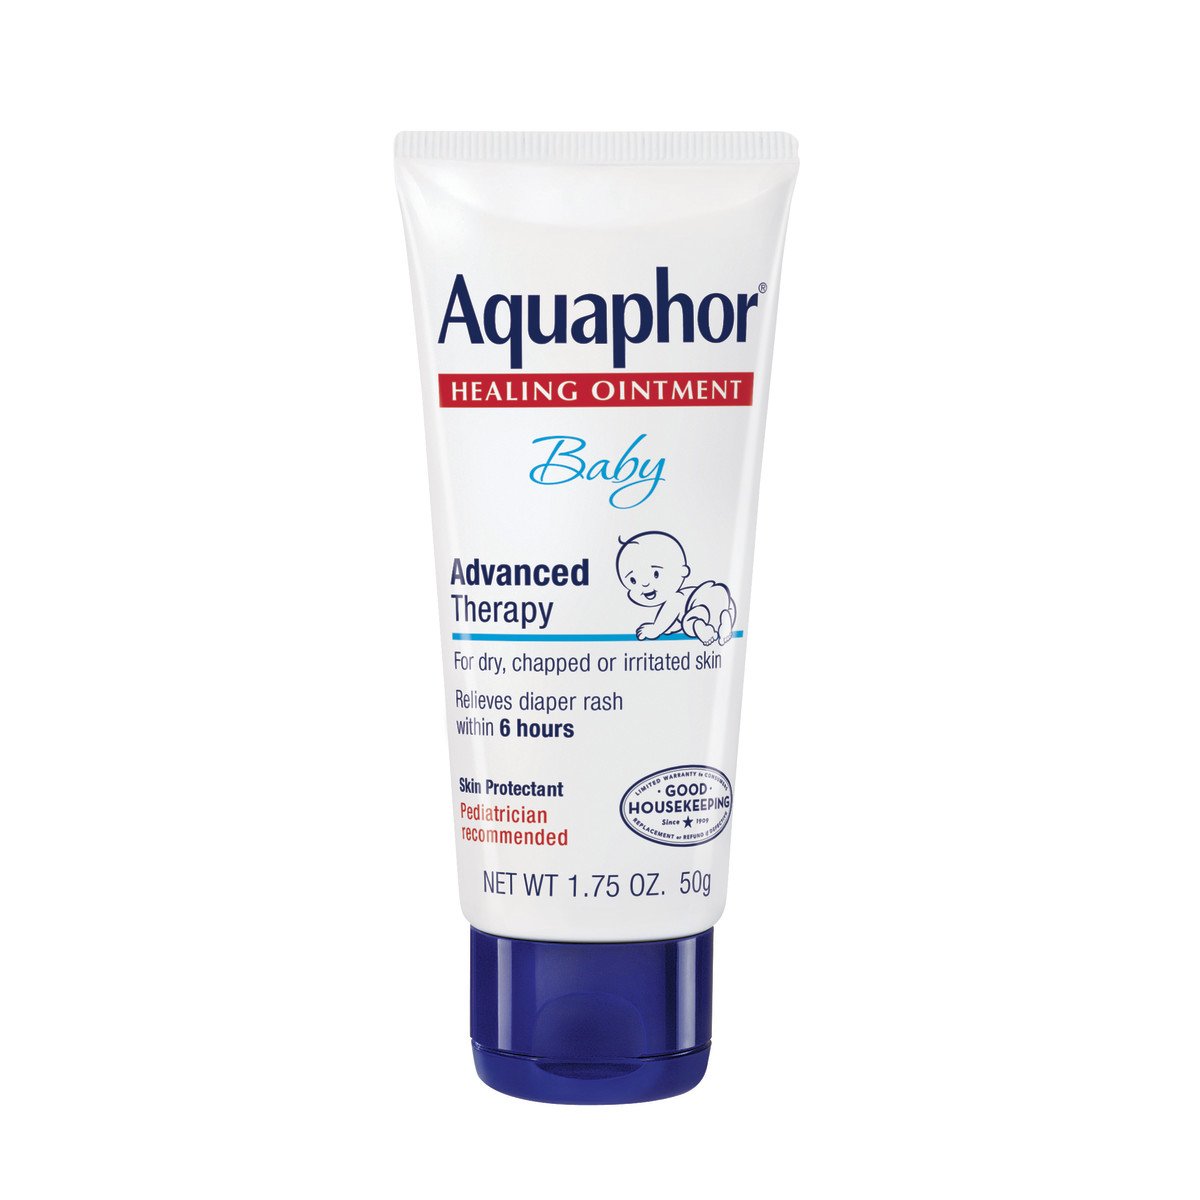 aquaphor baby healing ointment ingredients